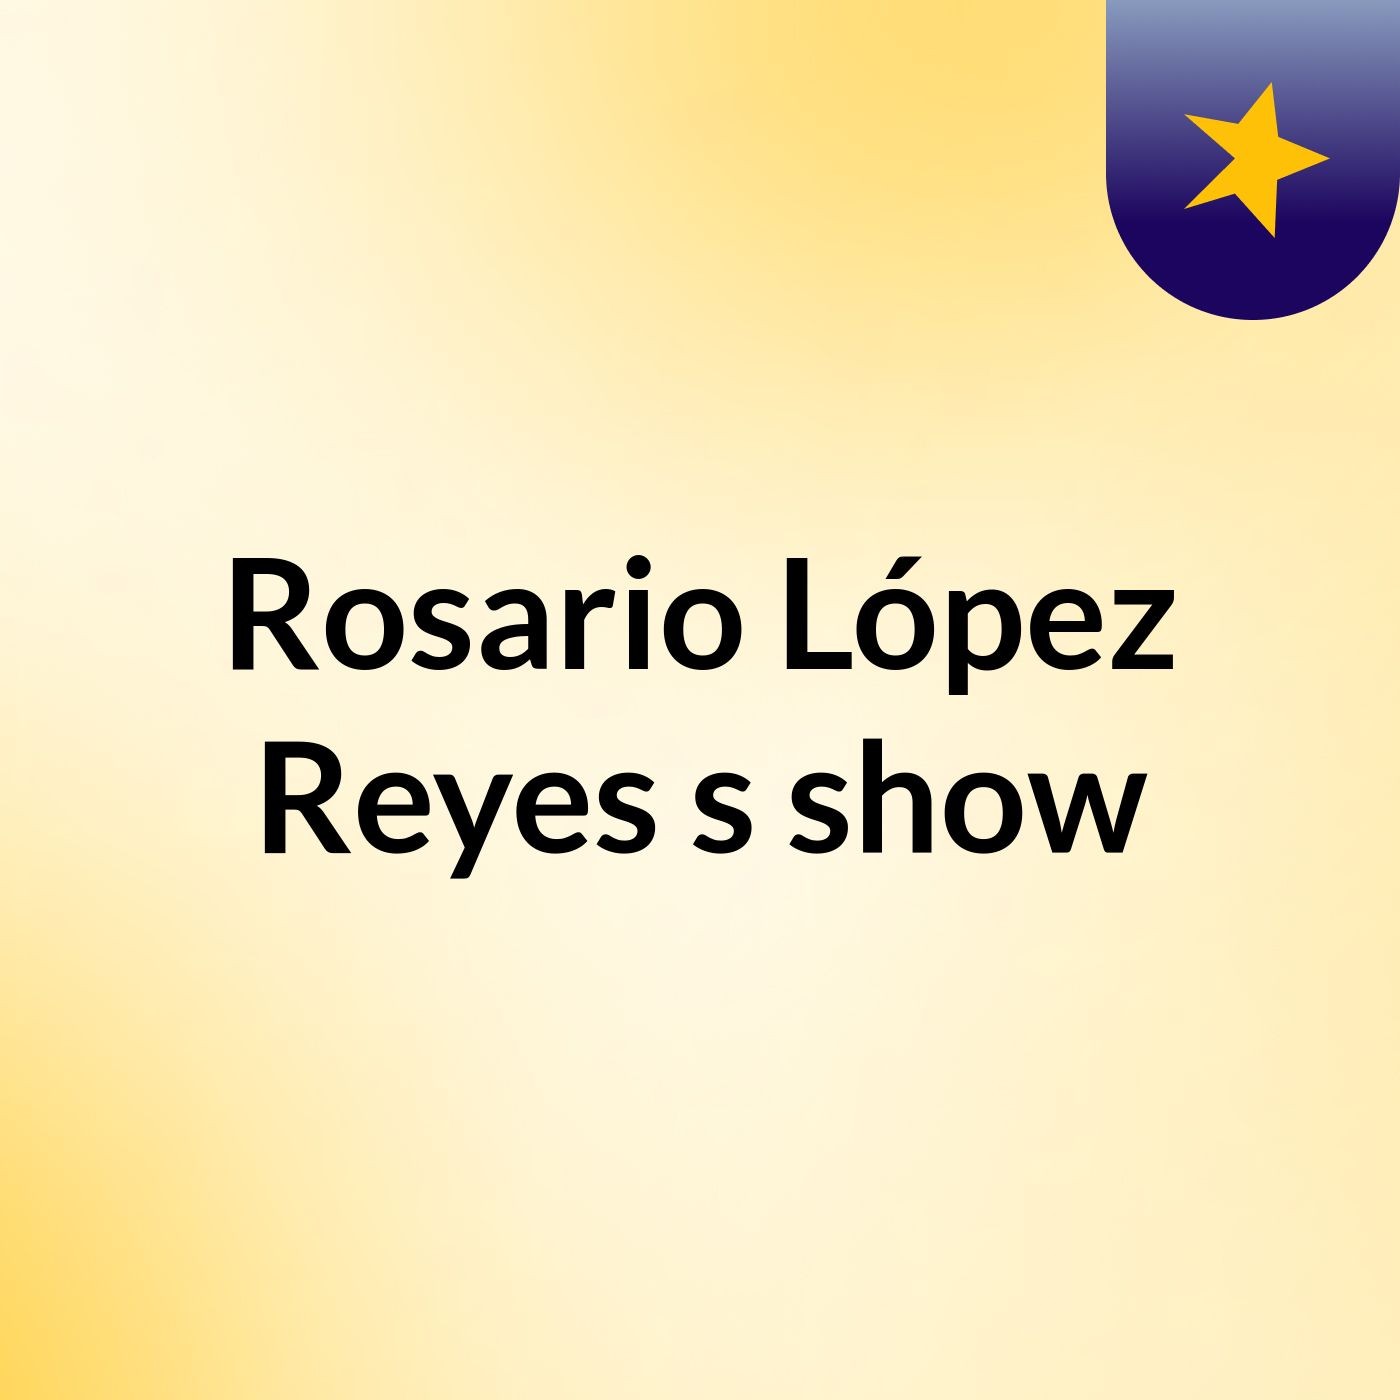 Episodio 3 - Rosario López Reyes's show